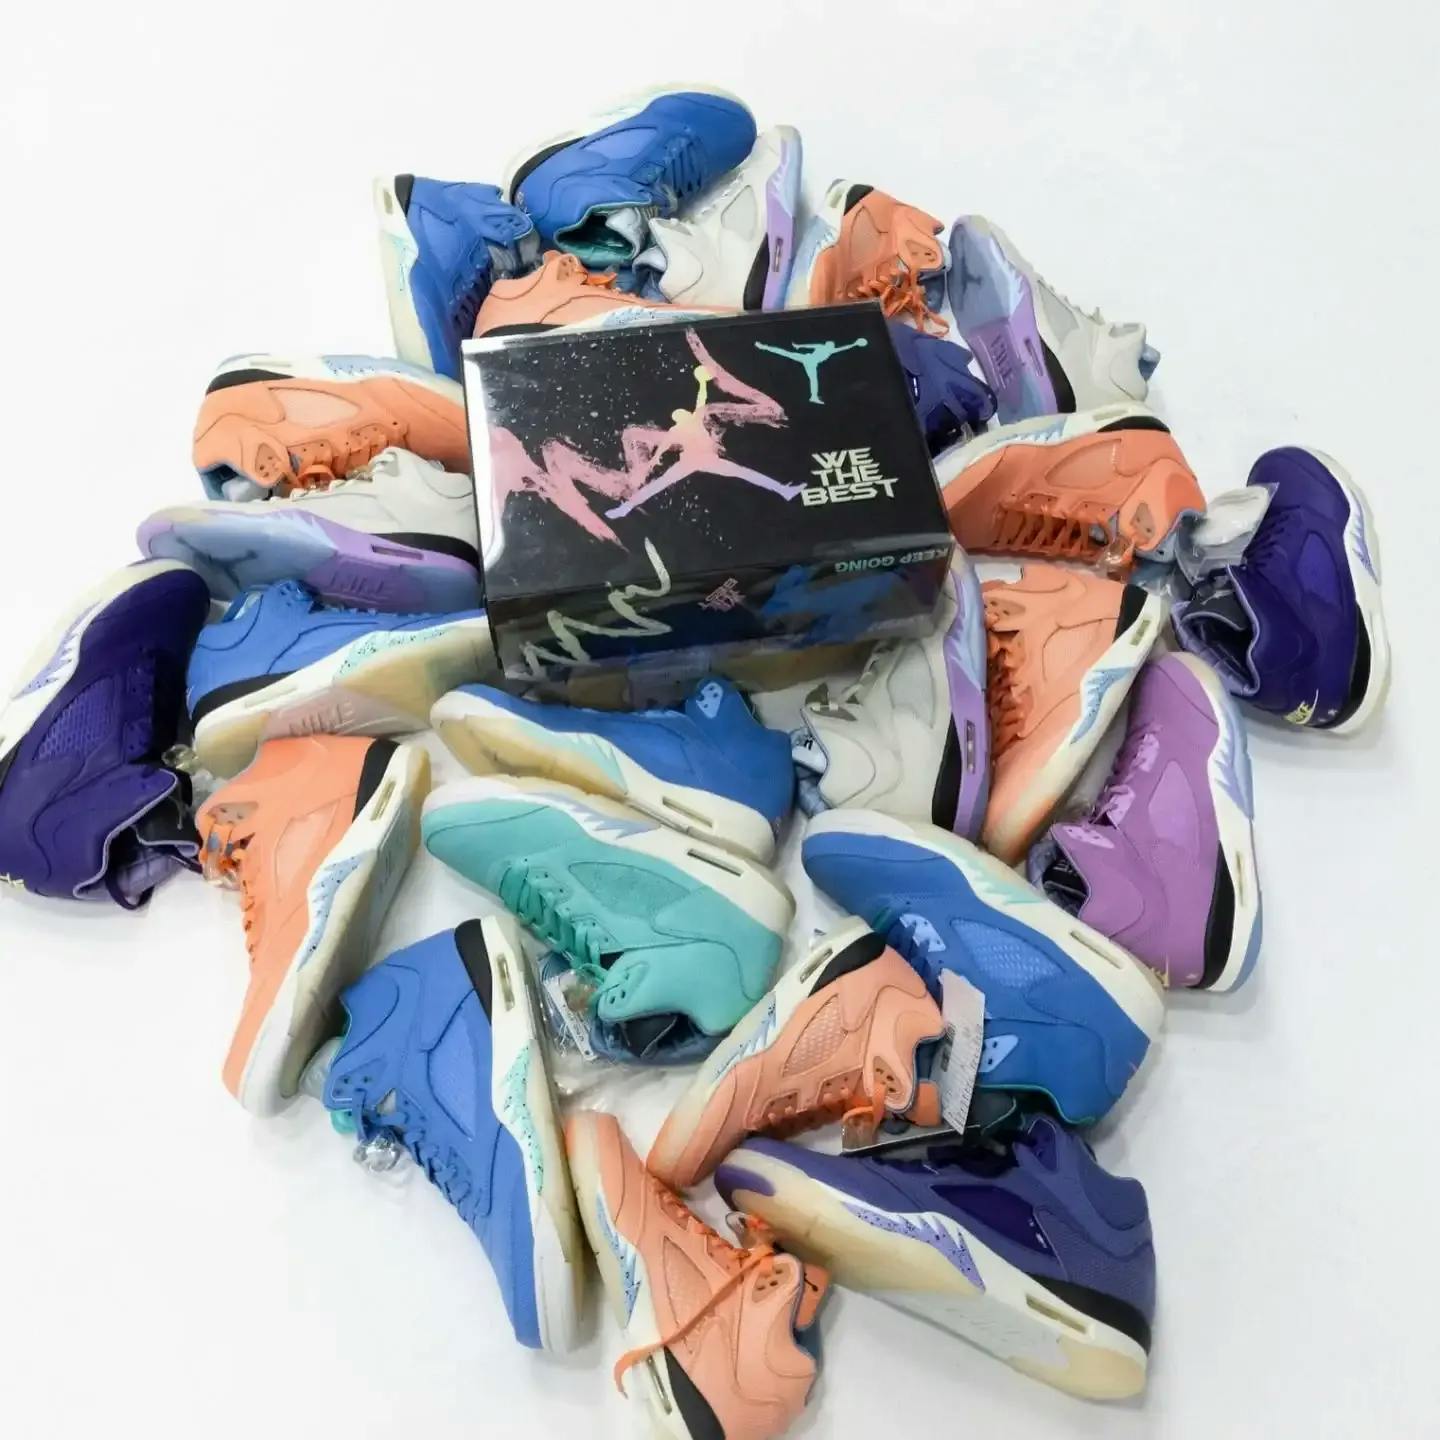 DJ Khaled Air Jordan 5 We The Best sneakers